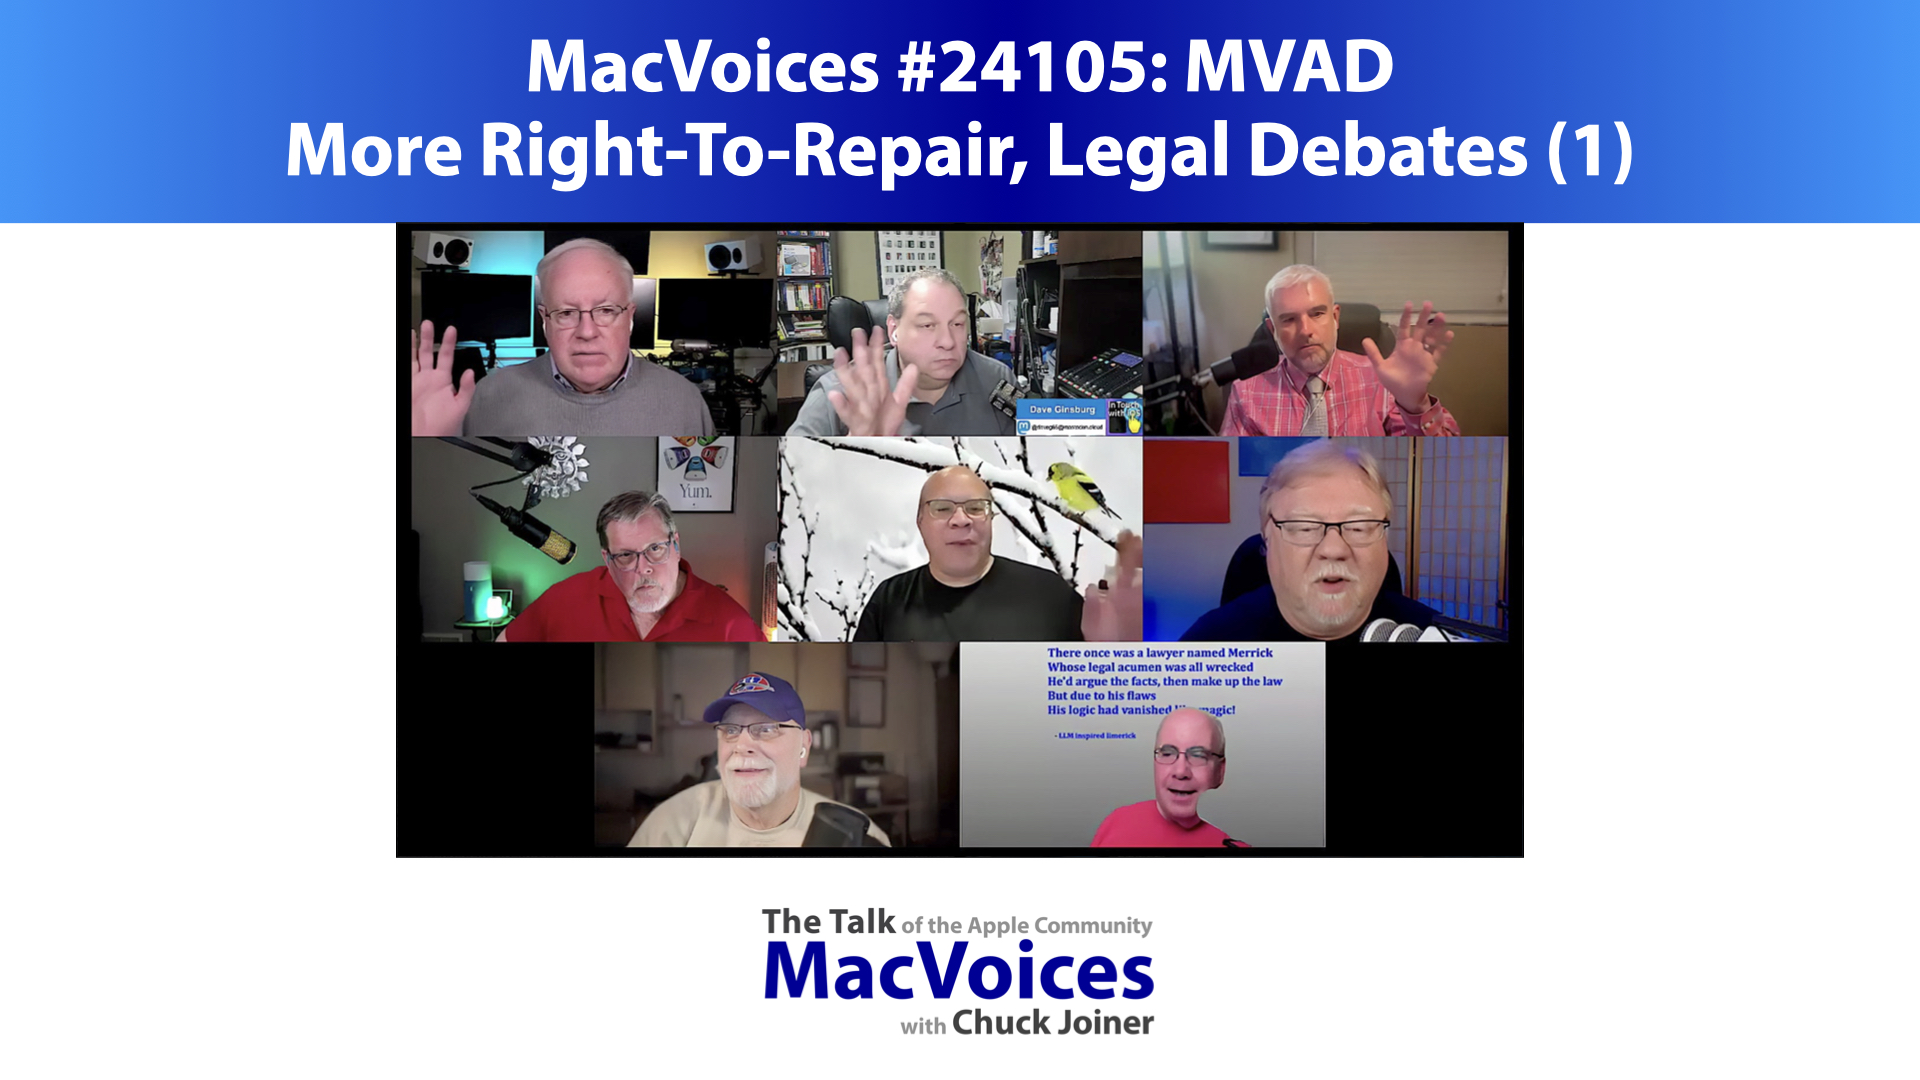 MacVoices #24105: MVAD - More Right-To-Repair, Legal Debates (1) - MacVoices